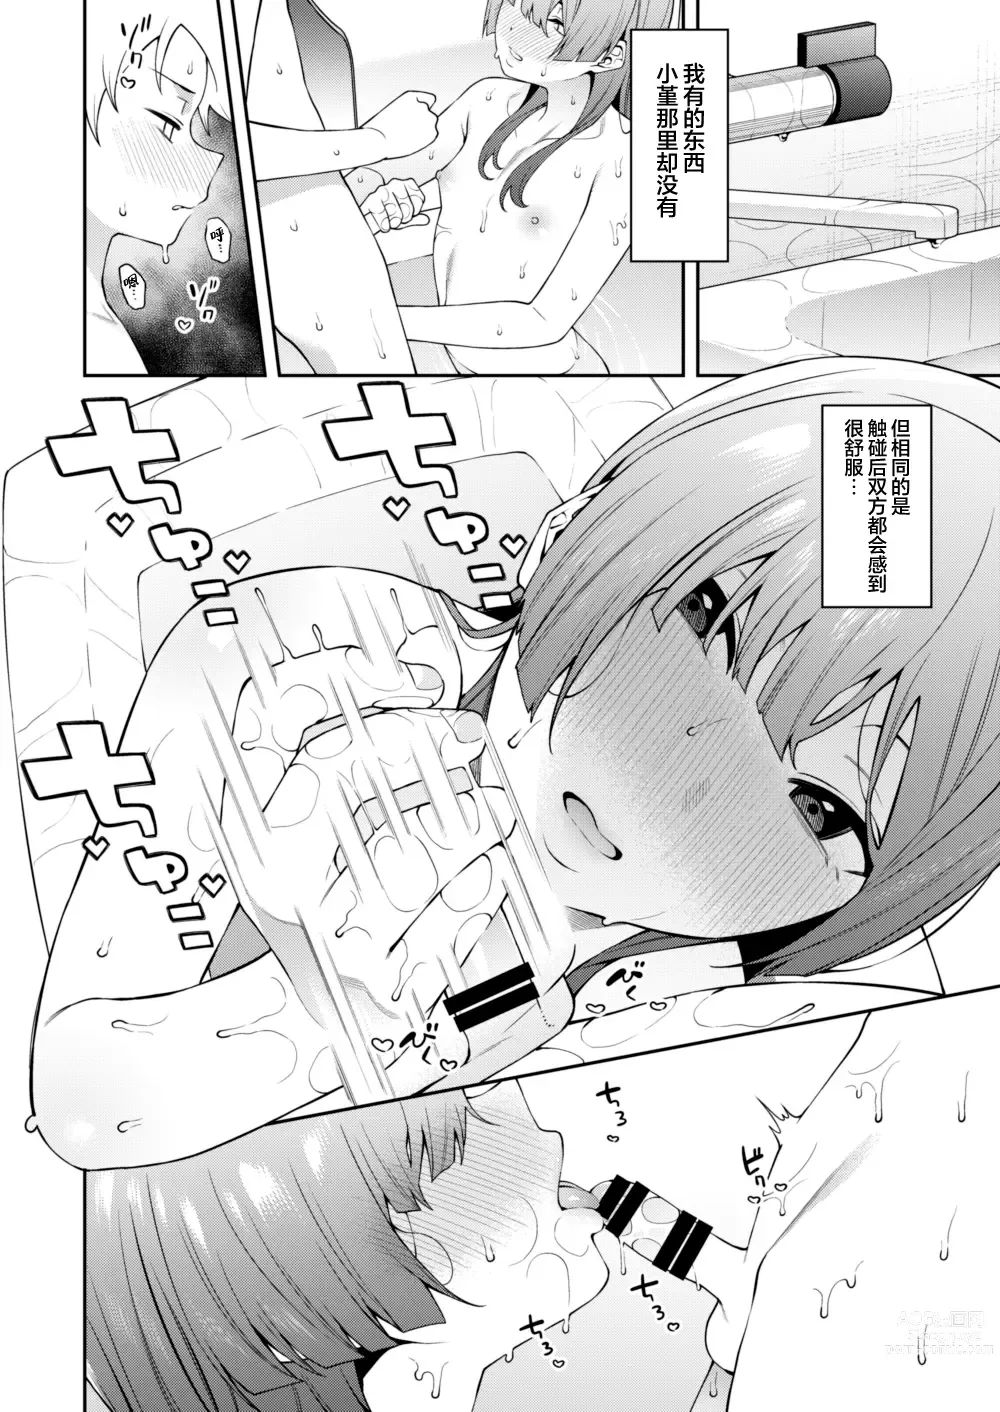 Page 7 of doujinshi Sumire-chan ha atama ga ii.